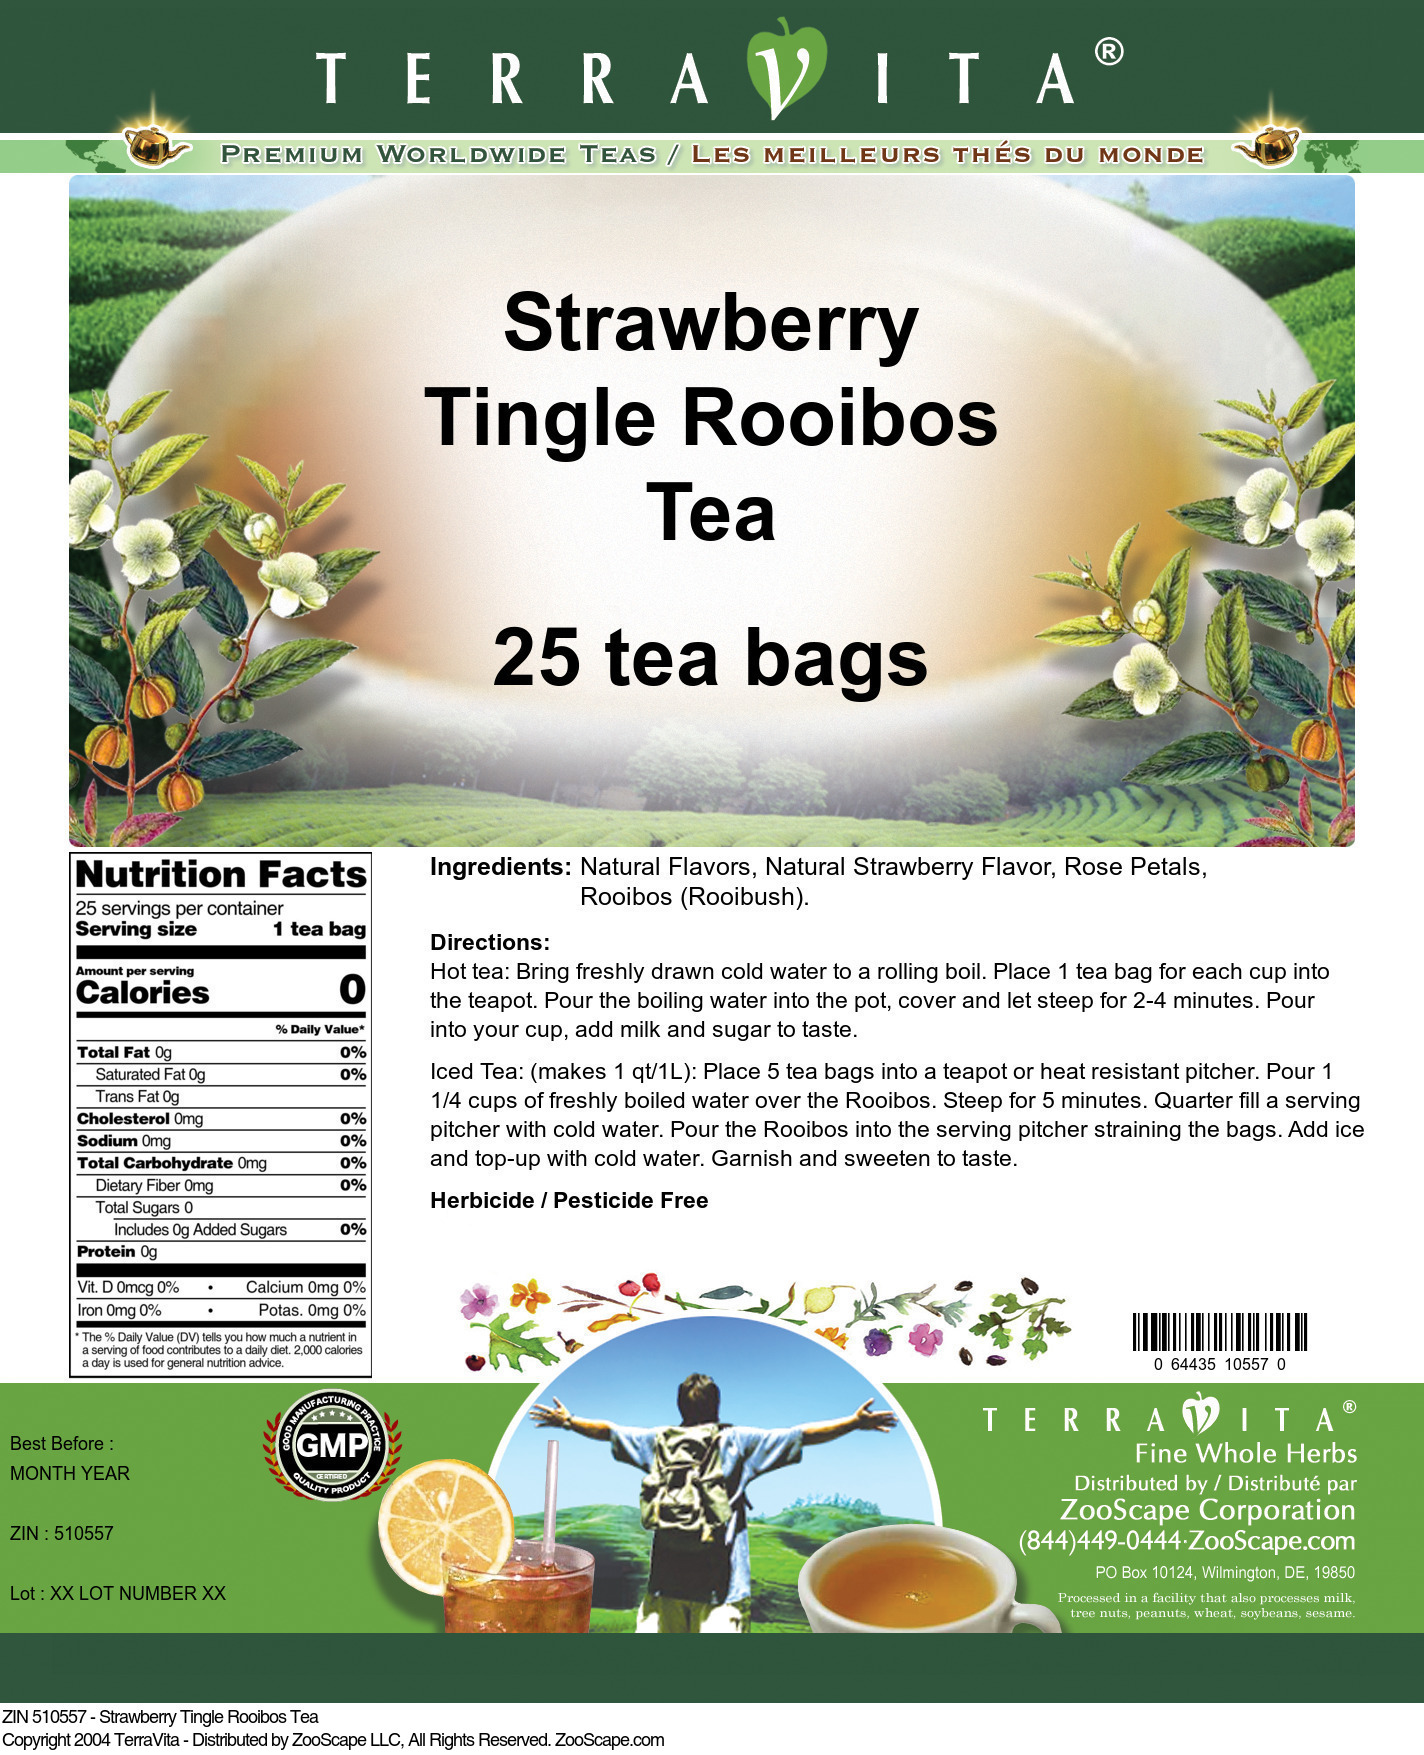 Strawberry Tingle Rooibos Tea - Label